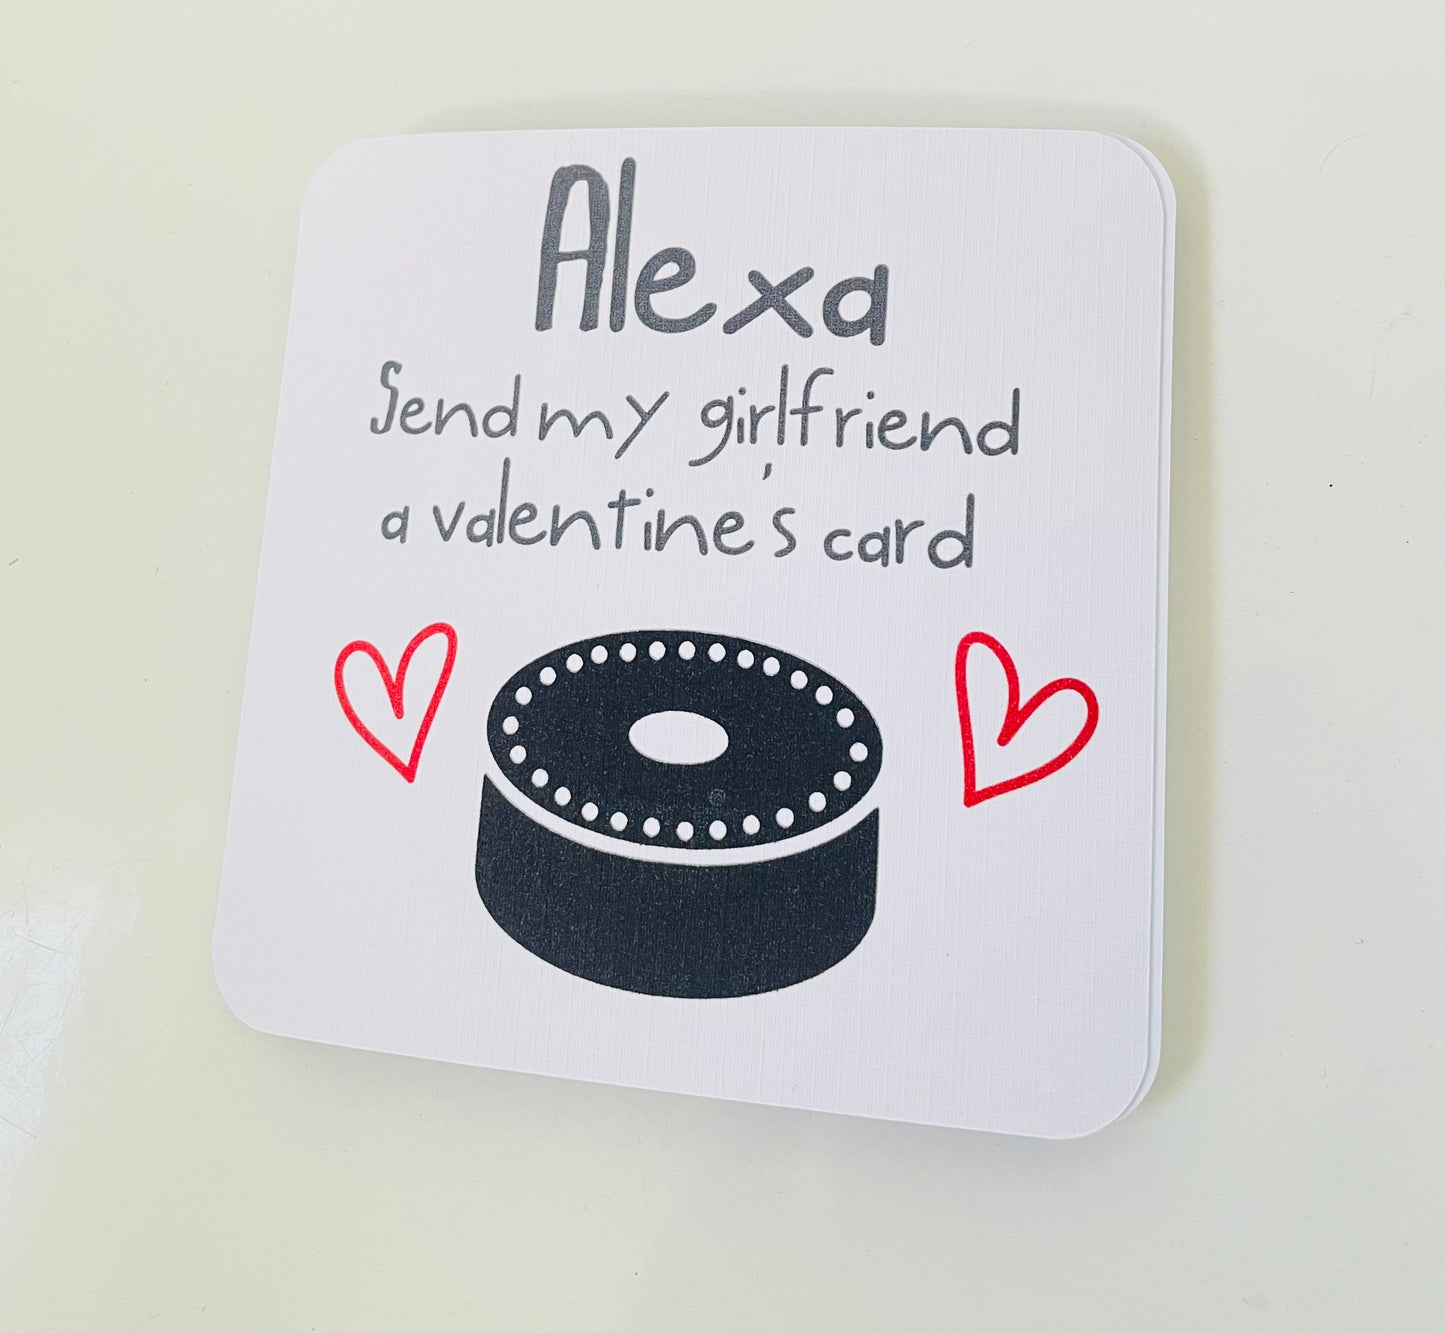 Alexa Send My Girlfriend a Valentine’s Day Card